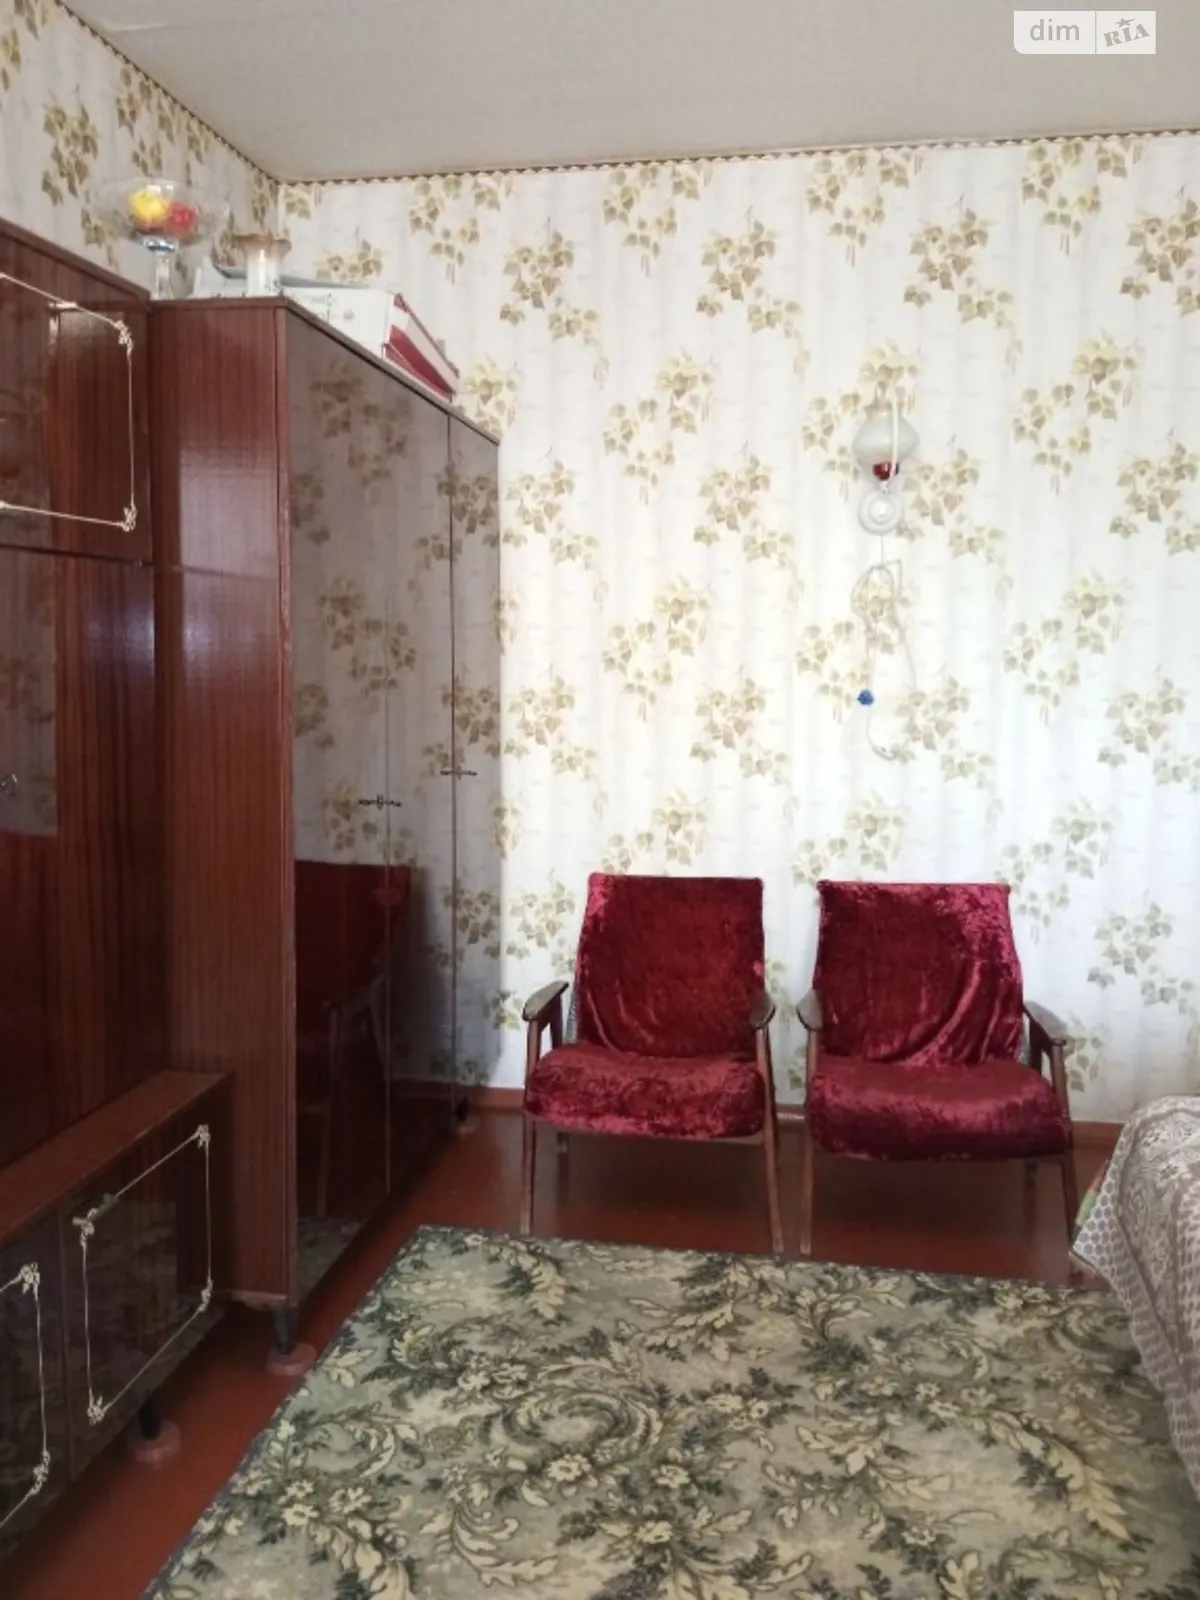 Сдается в аренду комната 10 кв. м в Киеве, цена: 3500 грн - фото 1